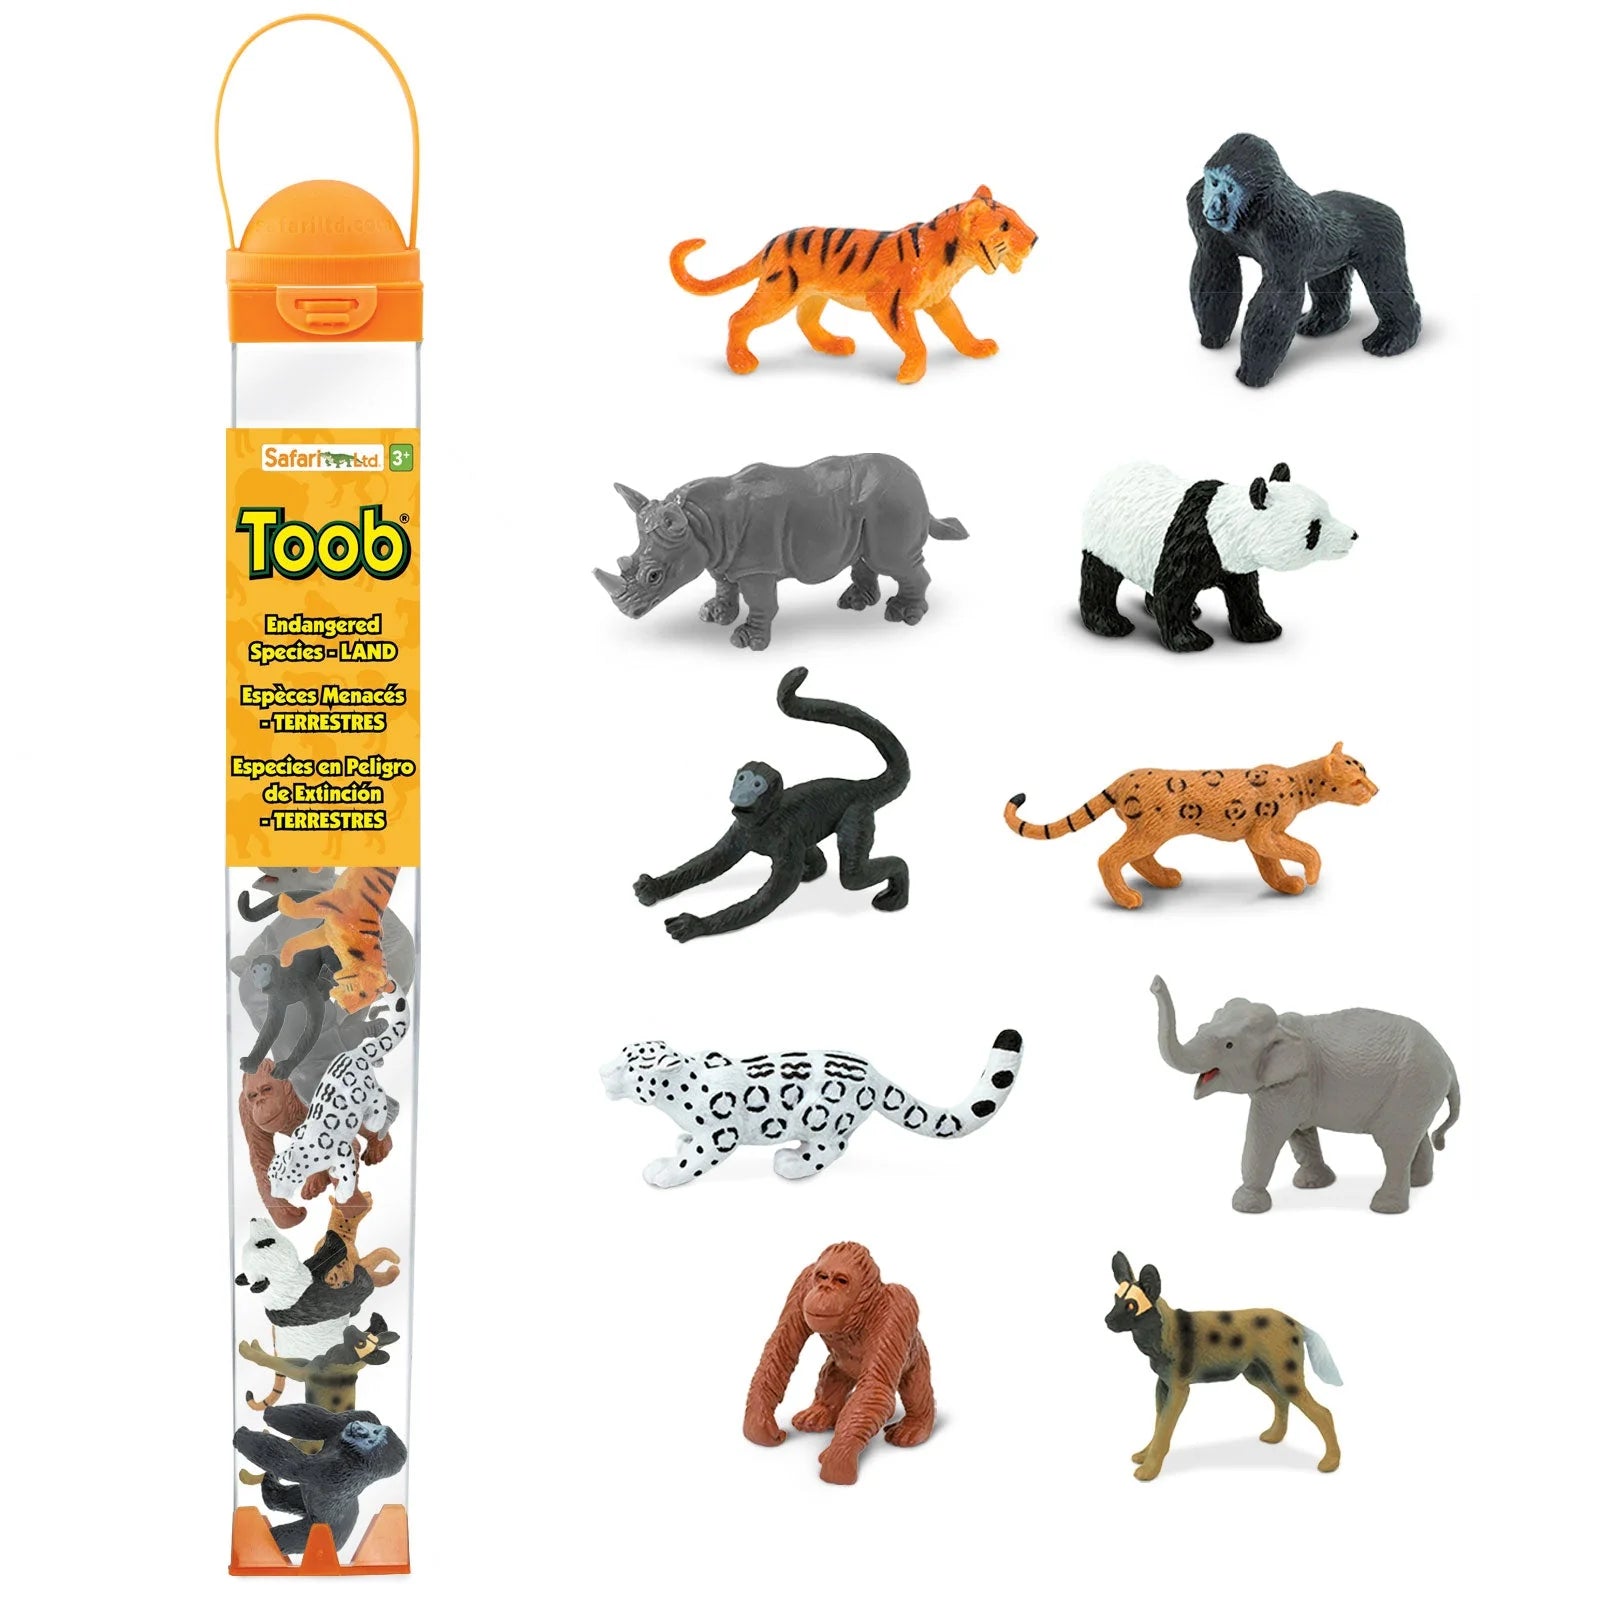 Safari Ltd TOOB® – Land Endangered Species